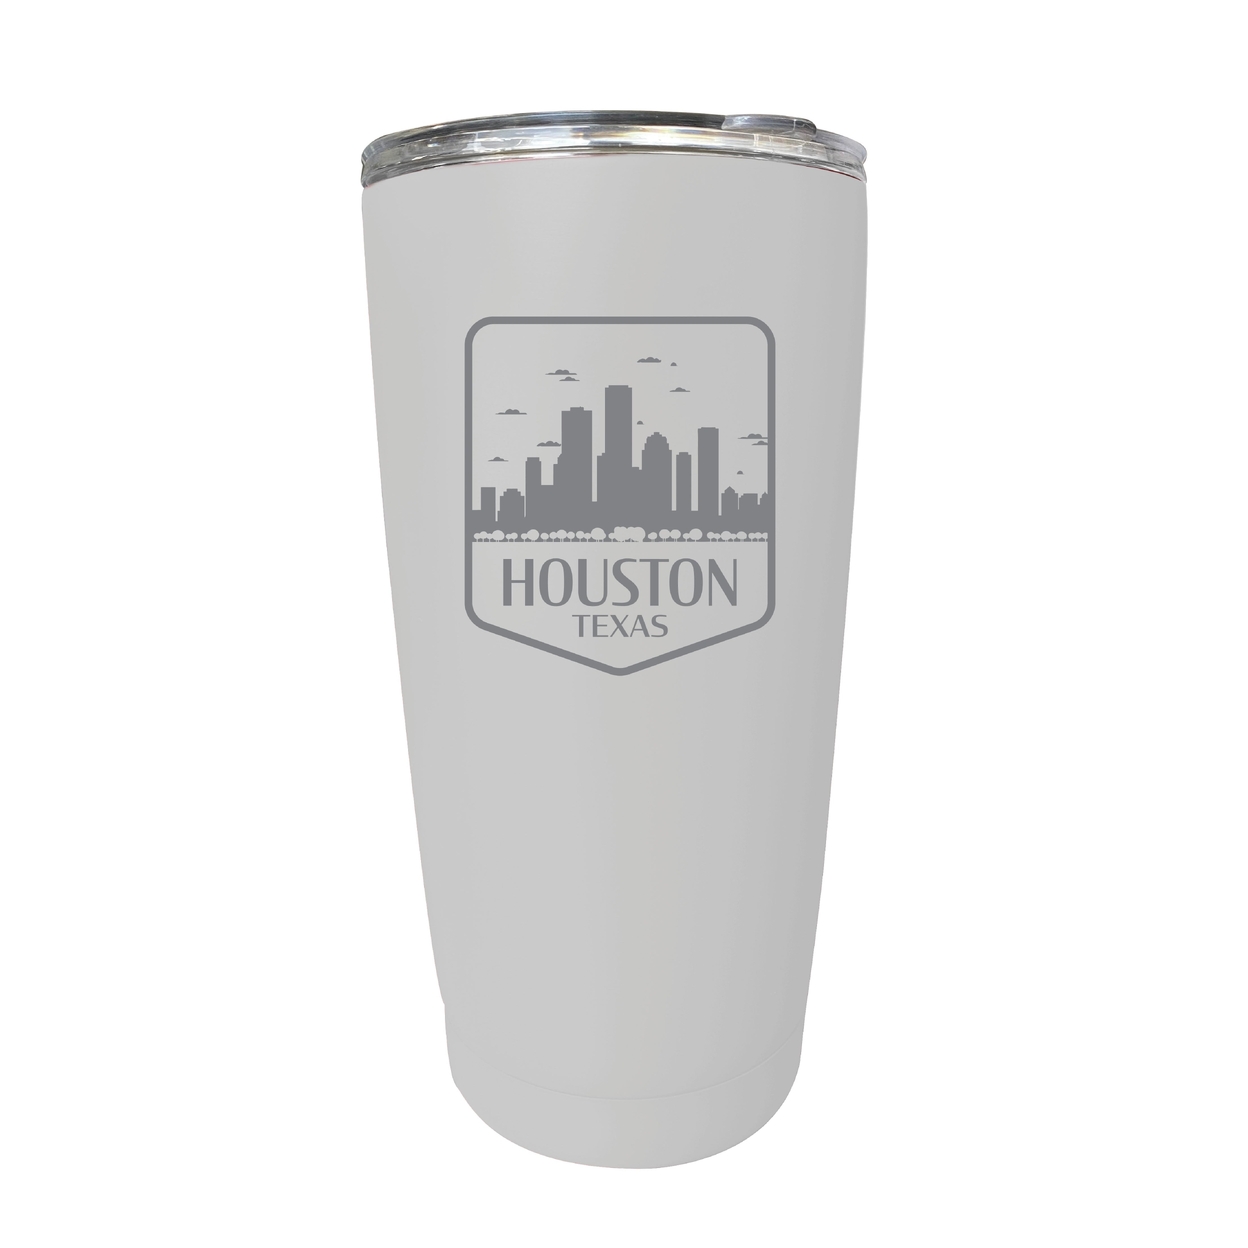 Houston Texas Souvenir 16 Oz Engraved Stainless Steel Insulated Tumbler - White,,4-Pack